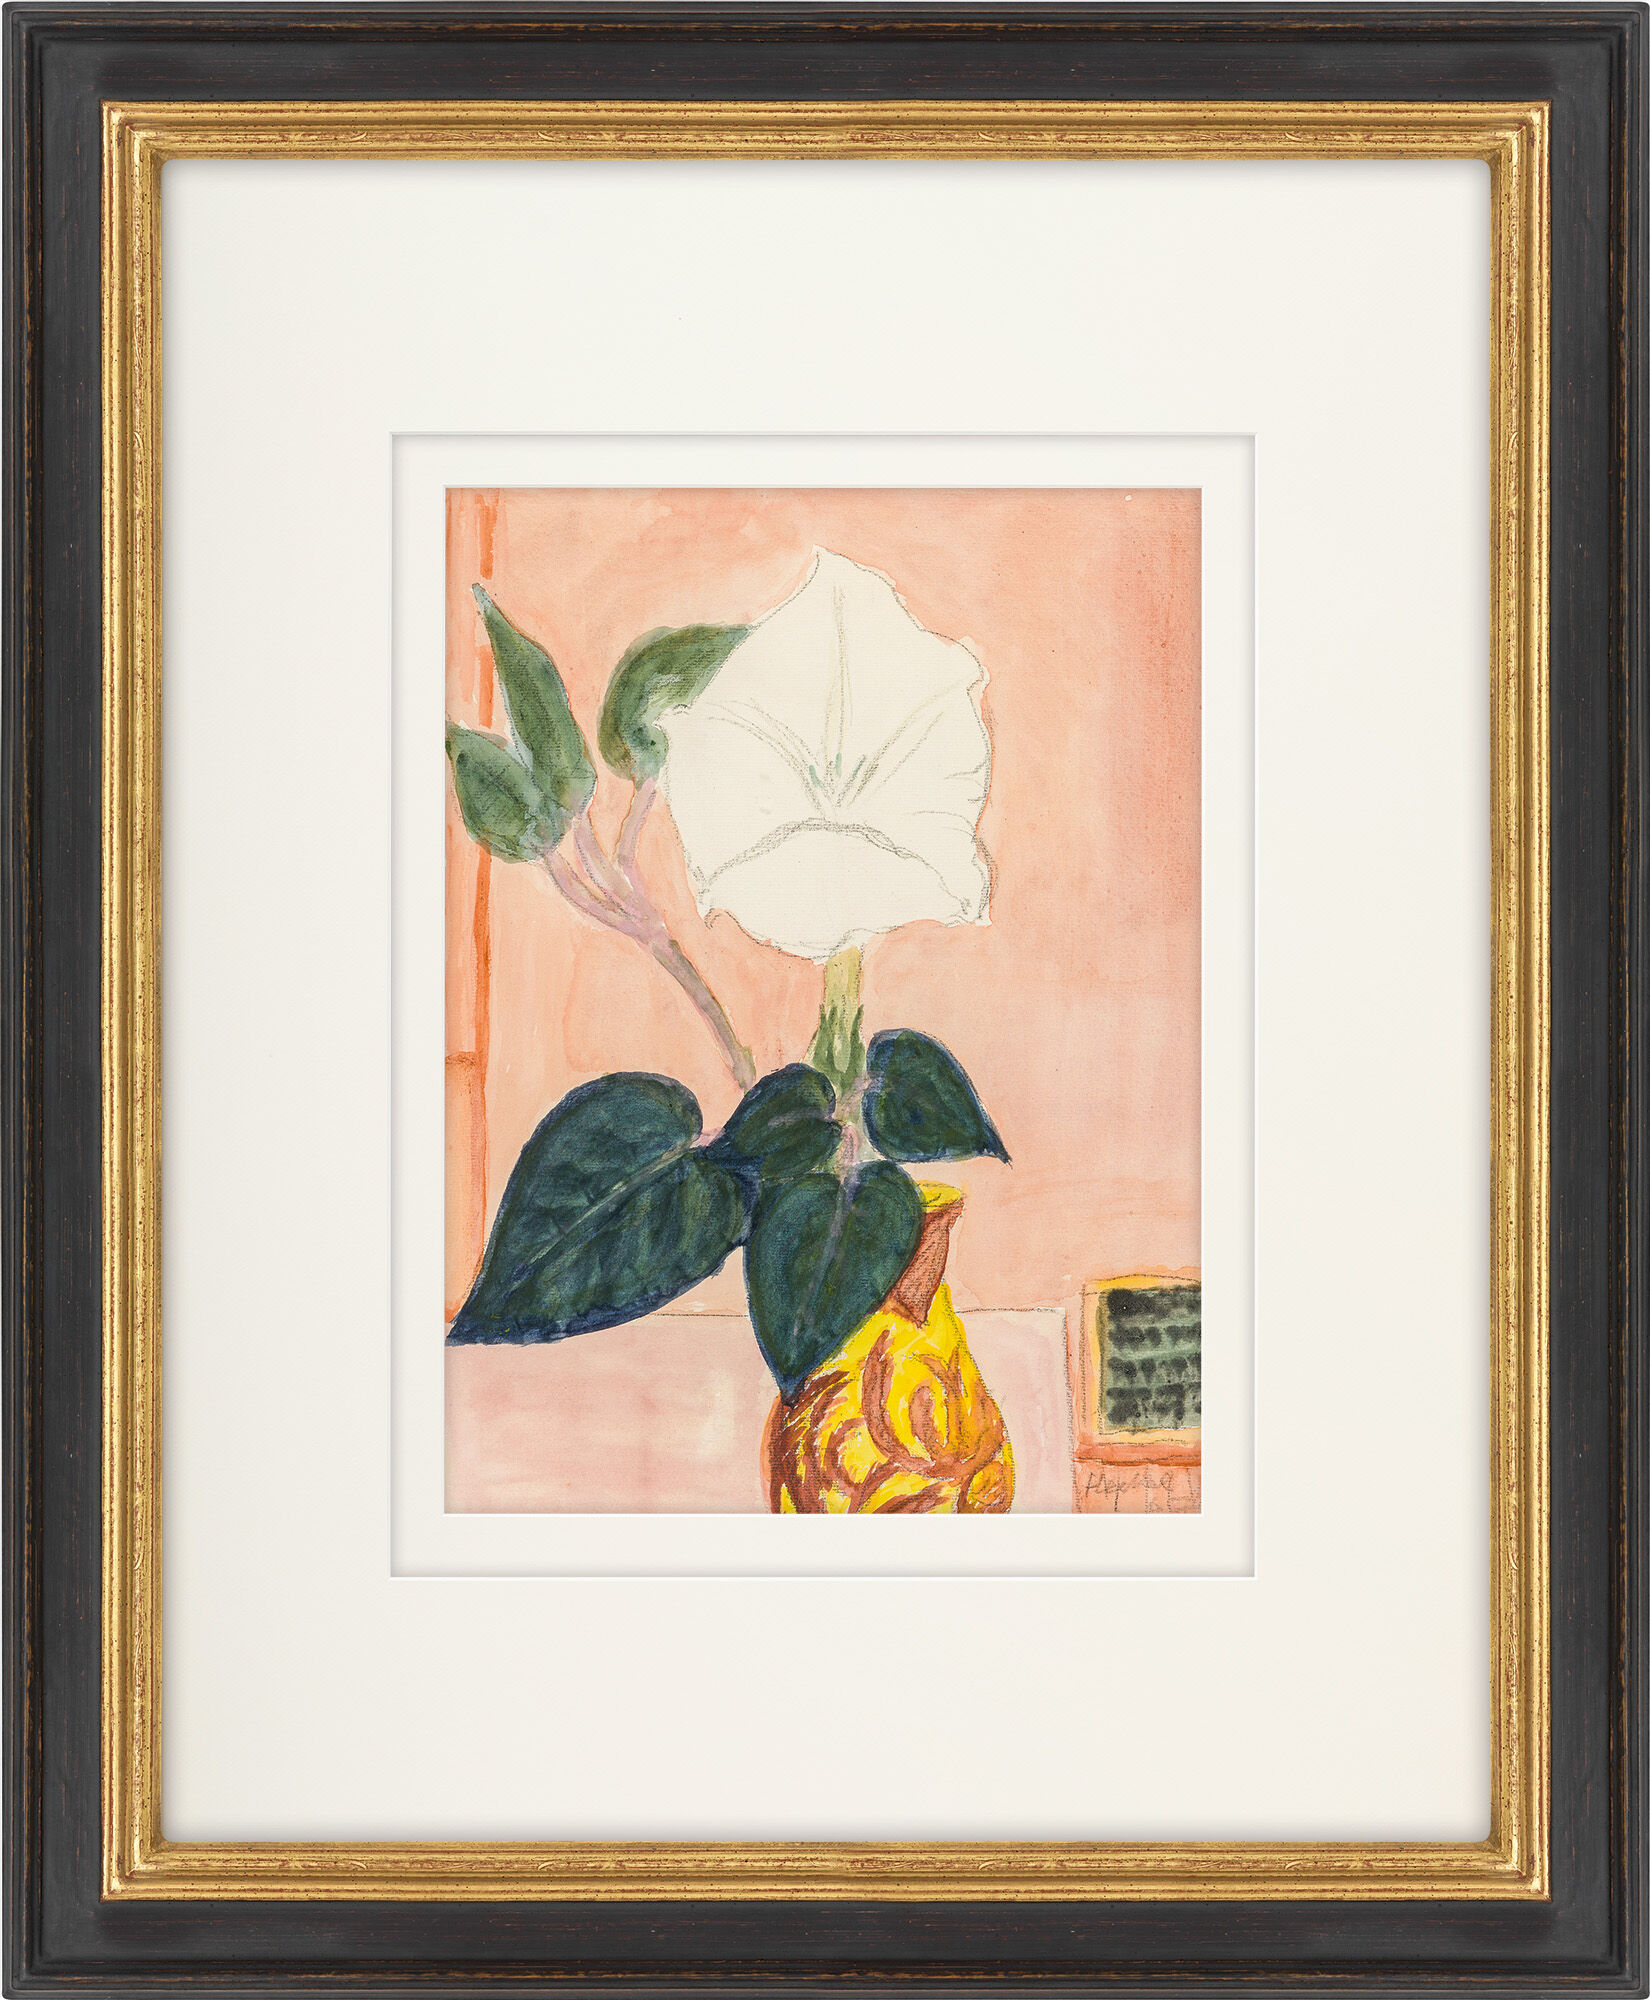 Picture "Datura Blossom" (1967) (Unique piece) by Erich Heckel